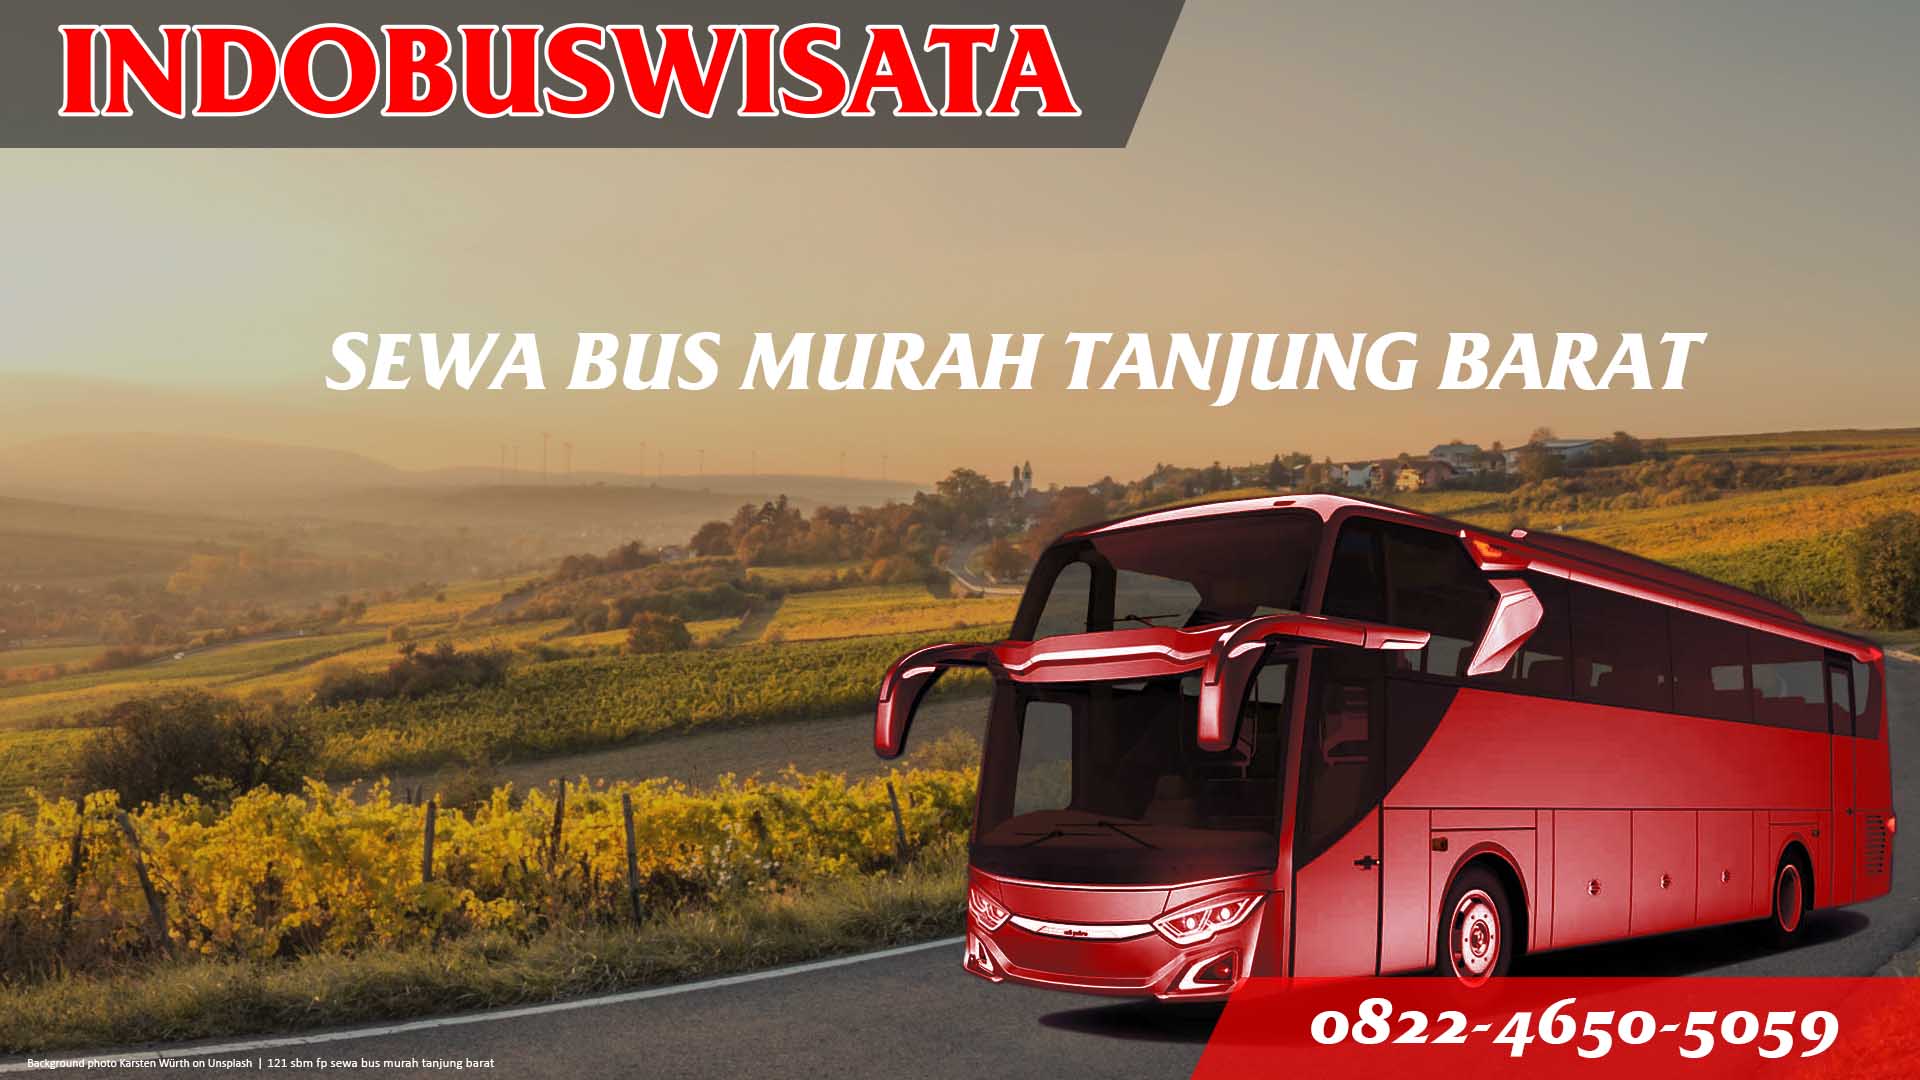 121 Sbm Fp Sewa Bus Murah Tanjung Barat Jb 3 Hdd Indobuswisata